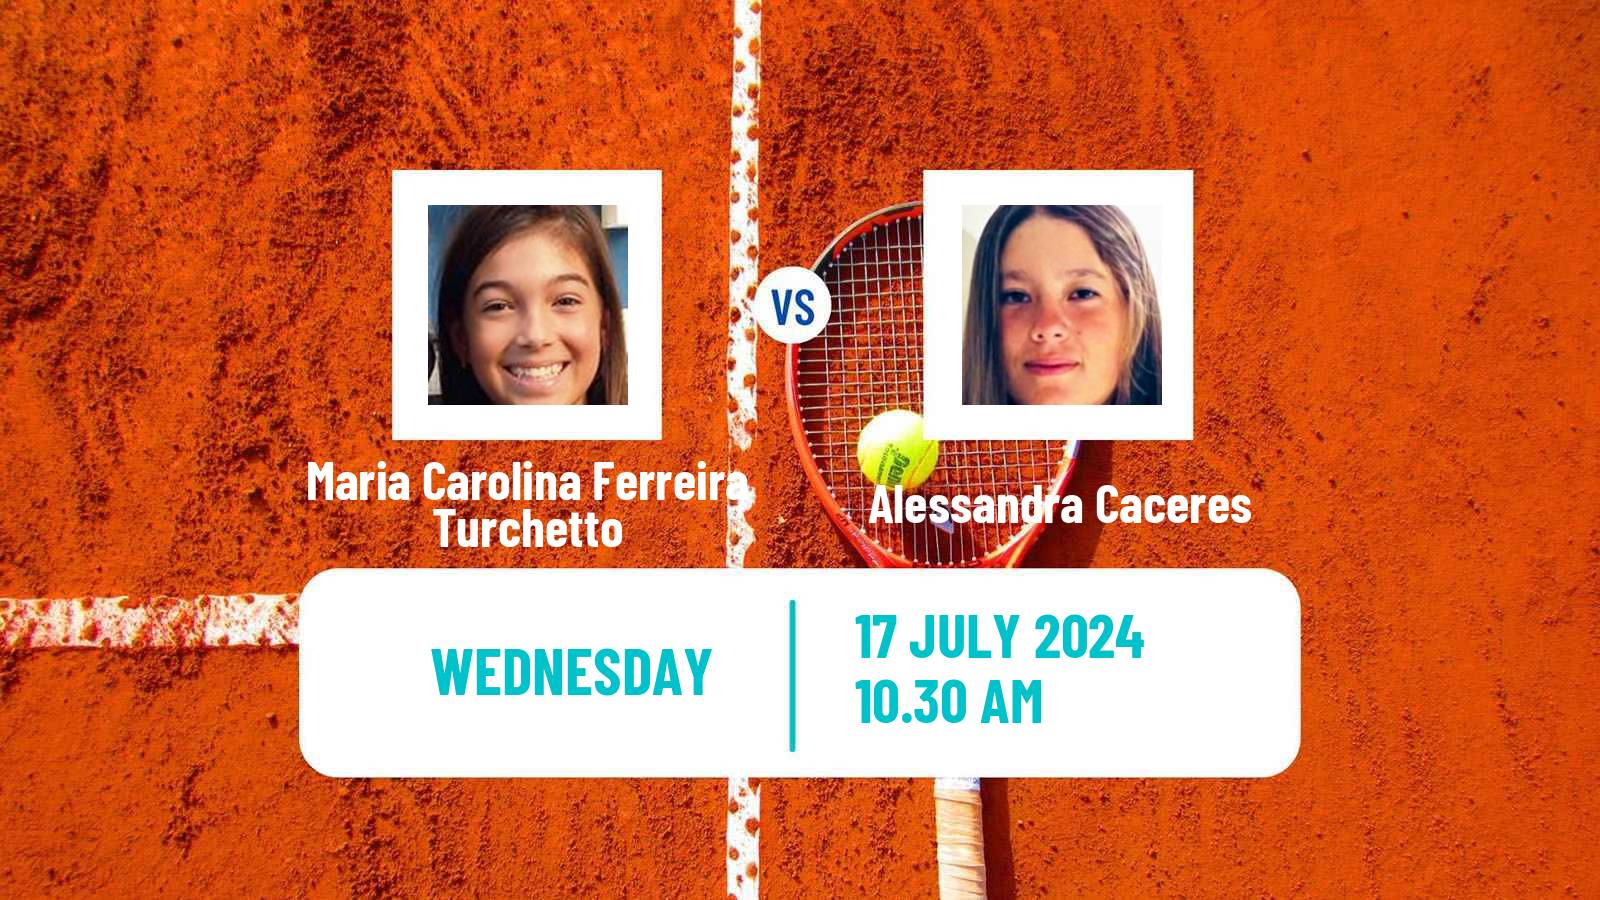 Tennis ITF W15 Lujan 2 Women Maria Carolina Ferreira Turchetto - Alessandra Caceres